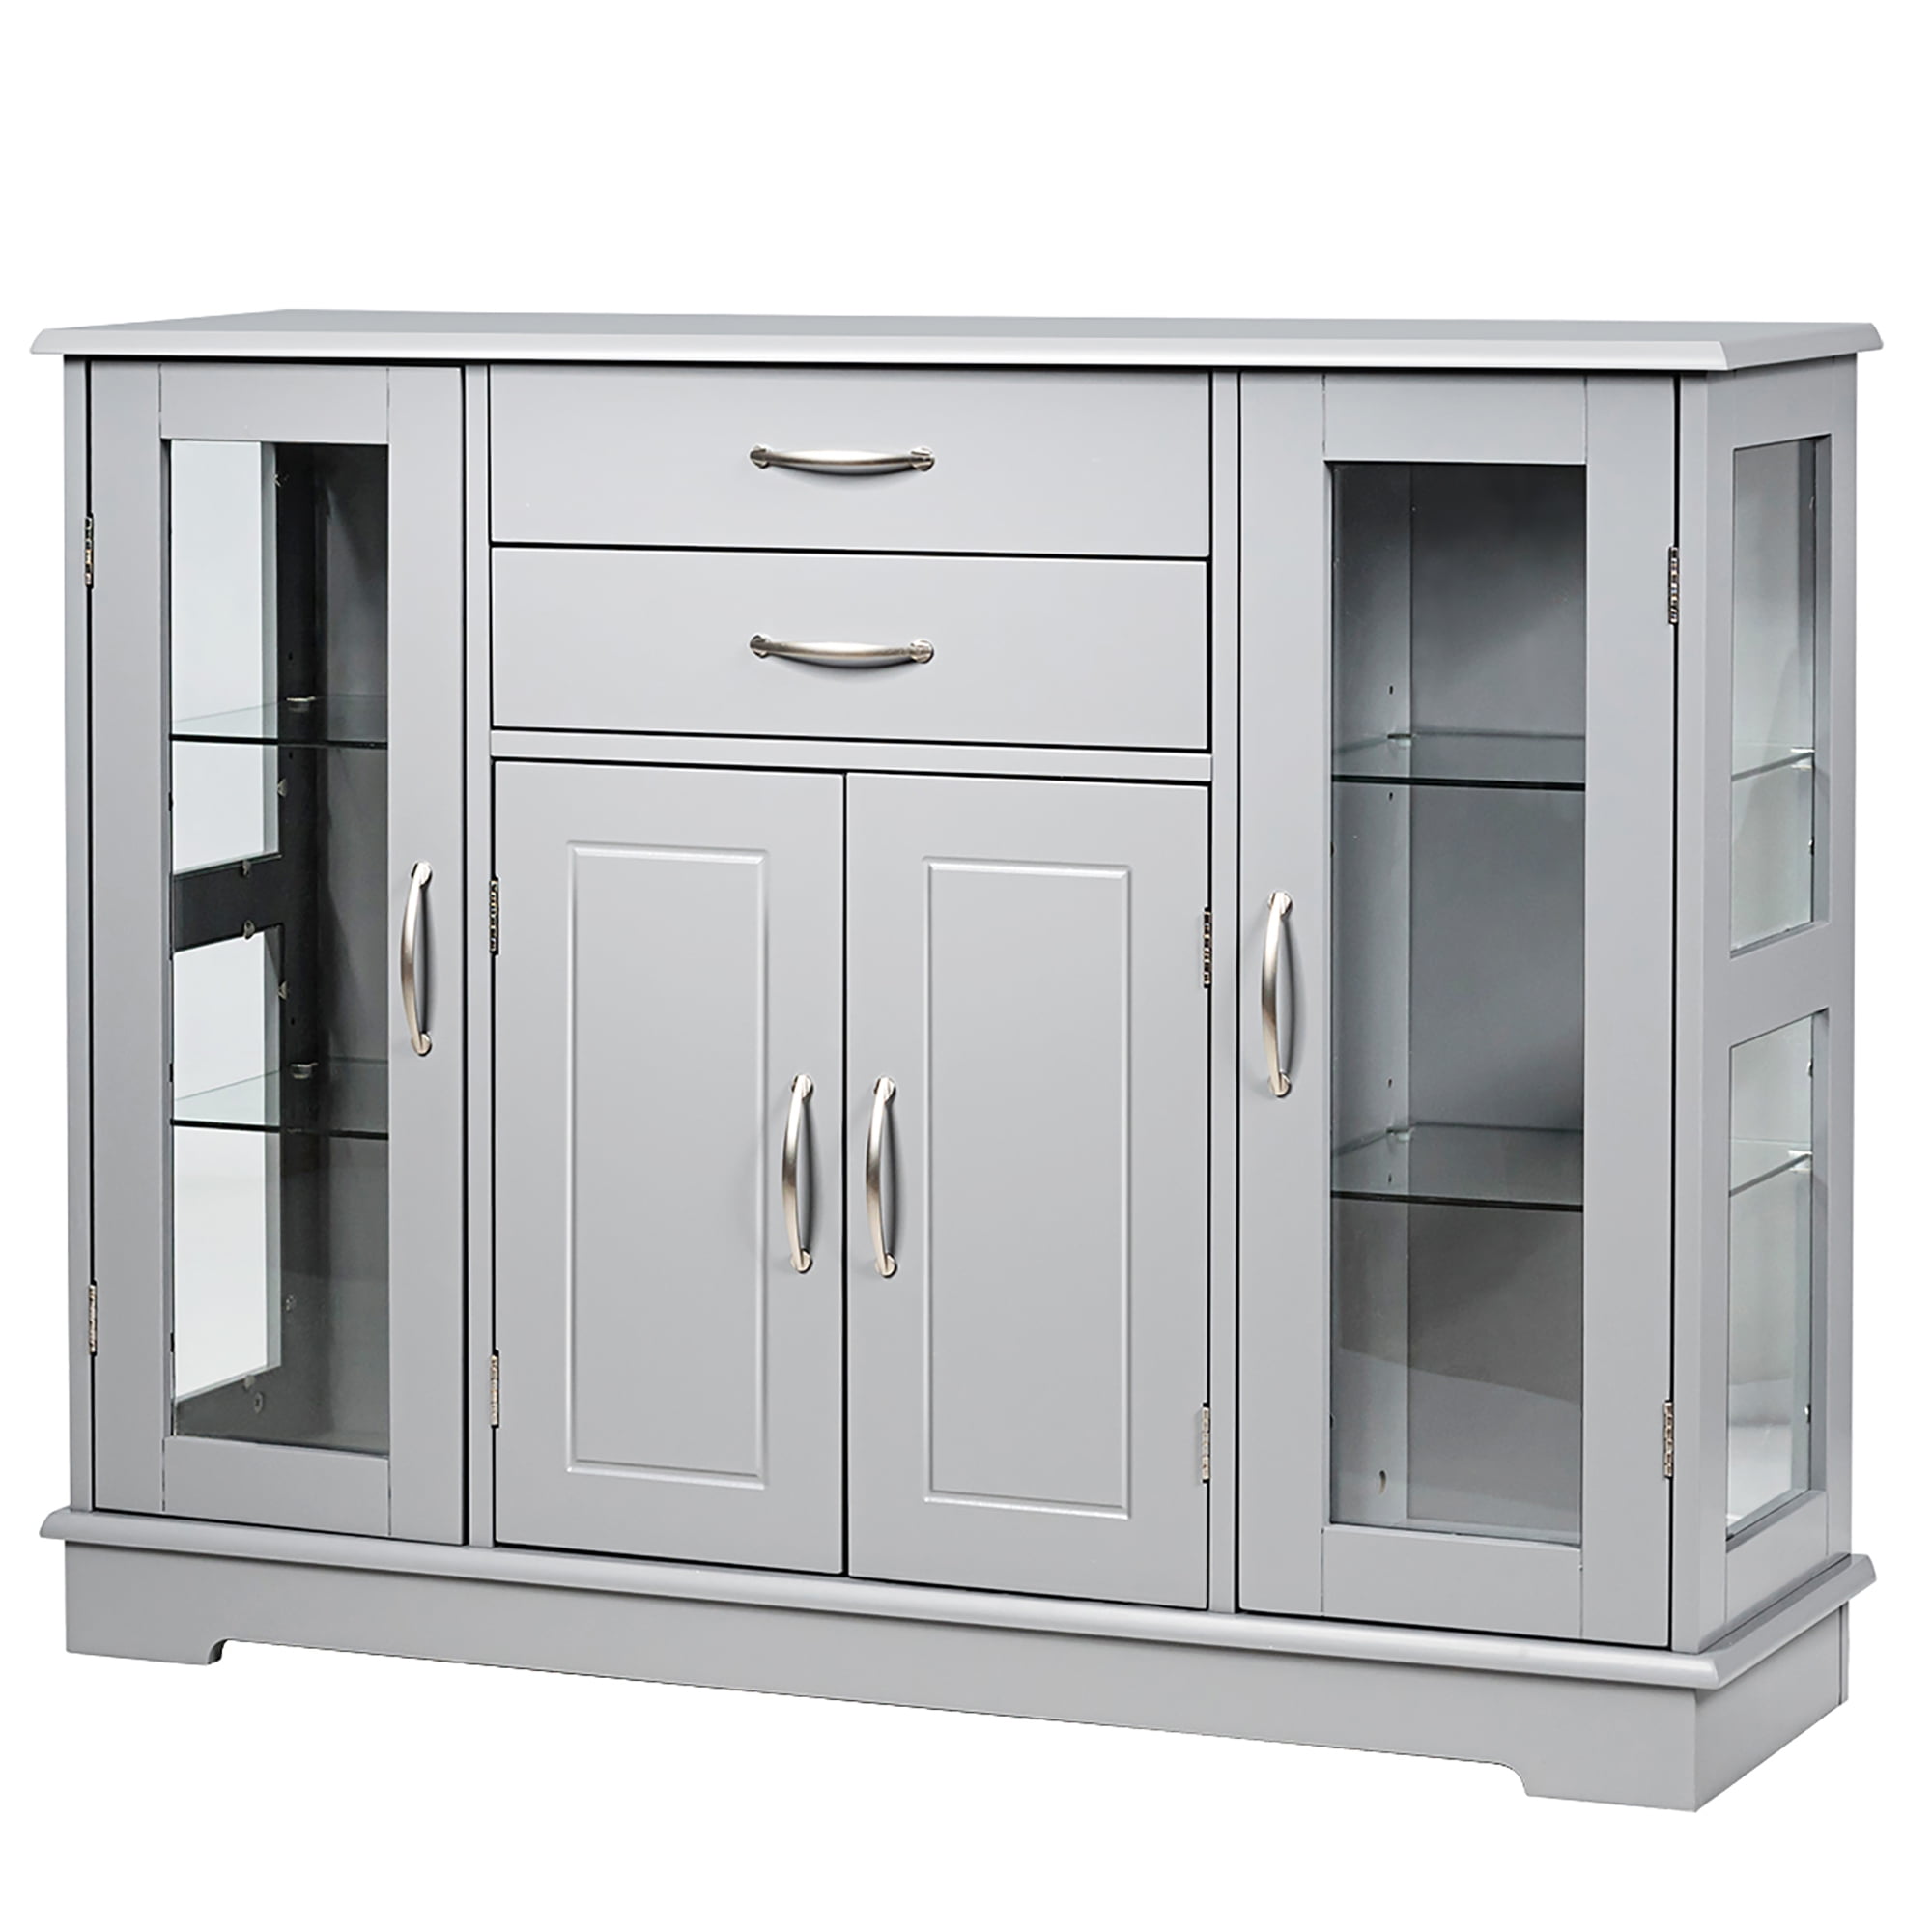 3 Drawer Home Source Grey Sideboard Cupboard with Living Room Storage Furniture MDF 2 Door